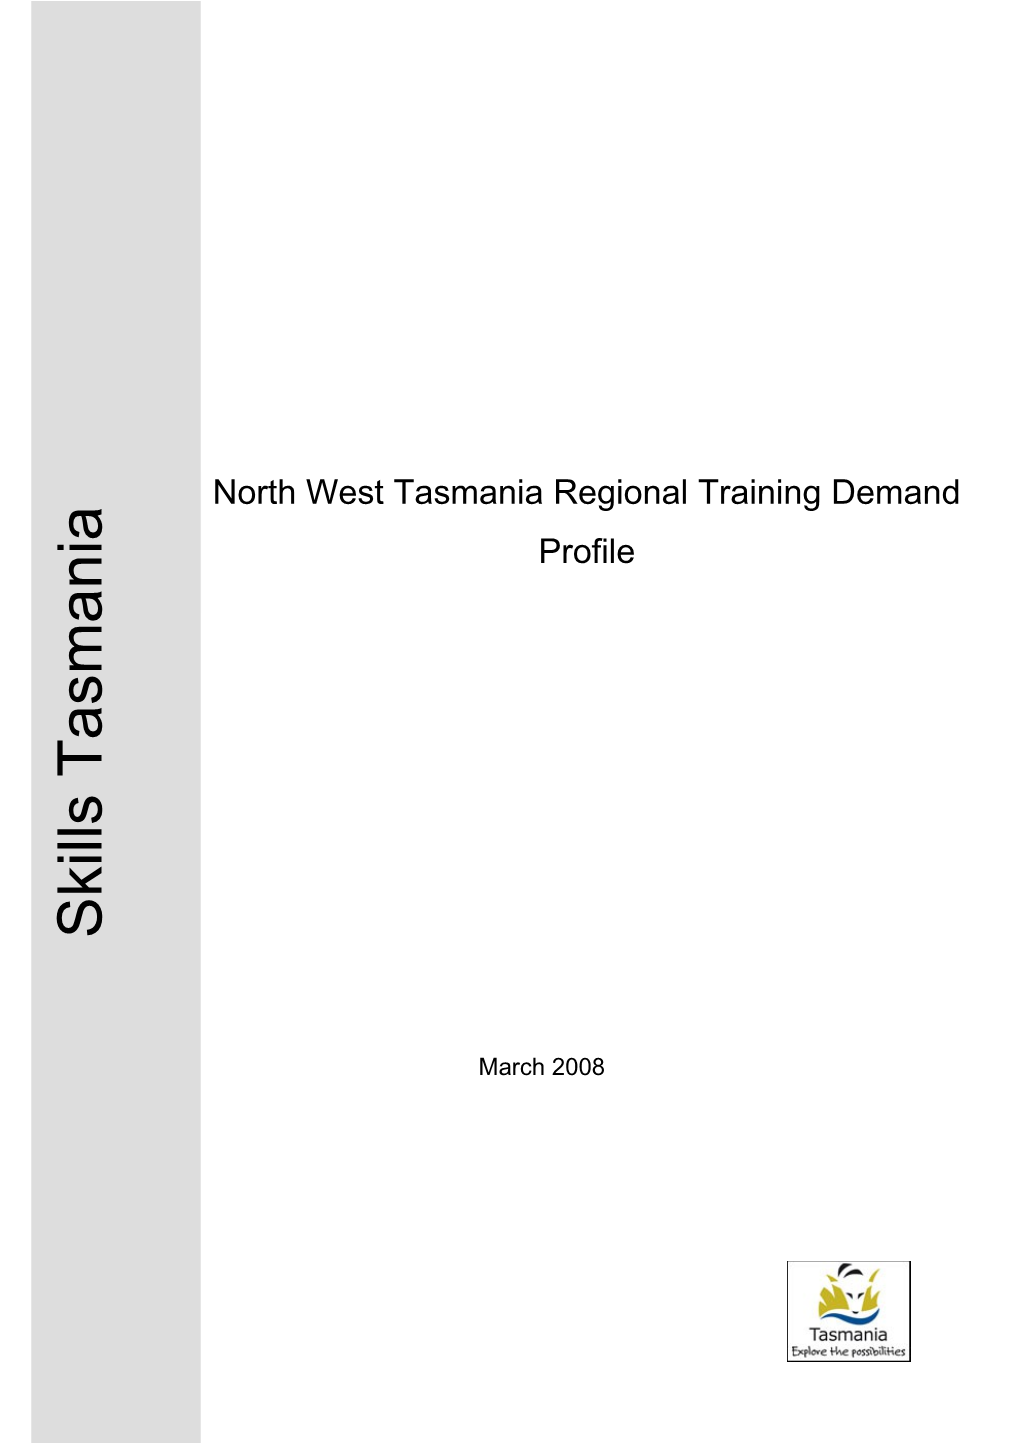 NW Tasmanian Regional Training Demand Profile